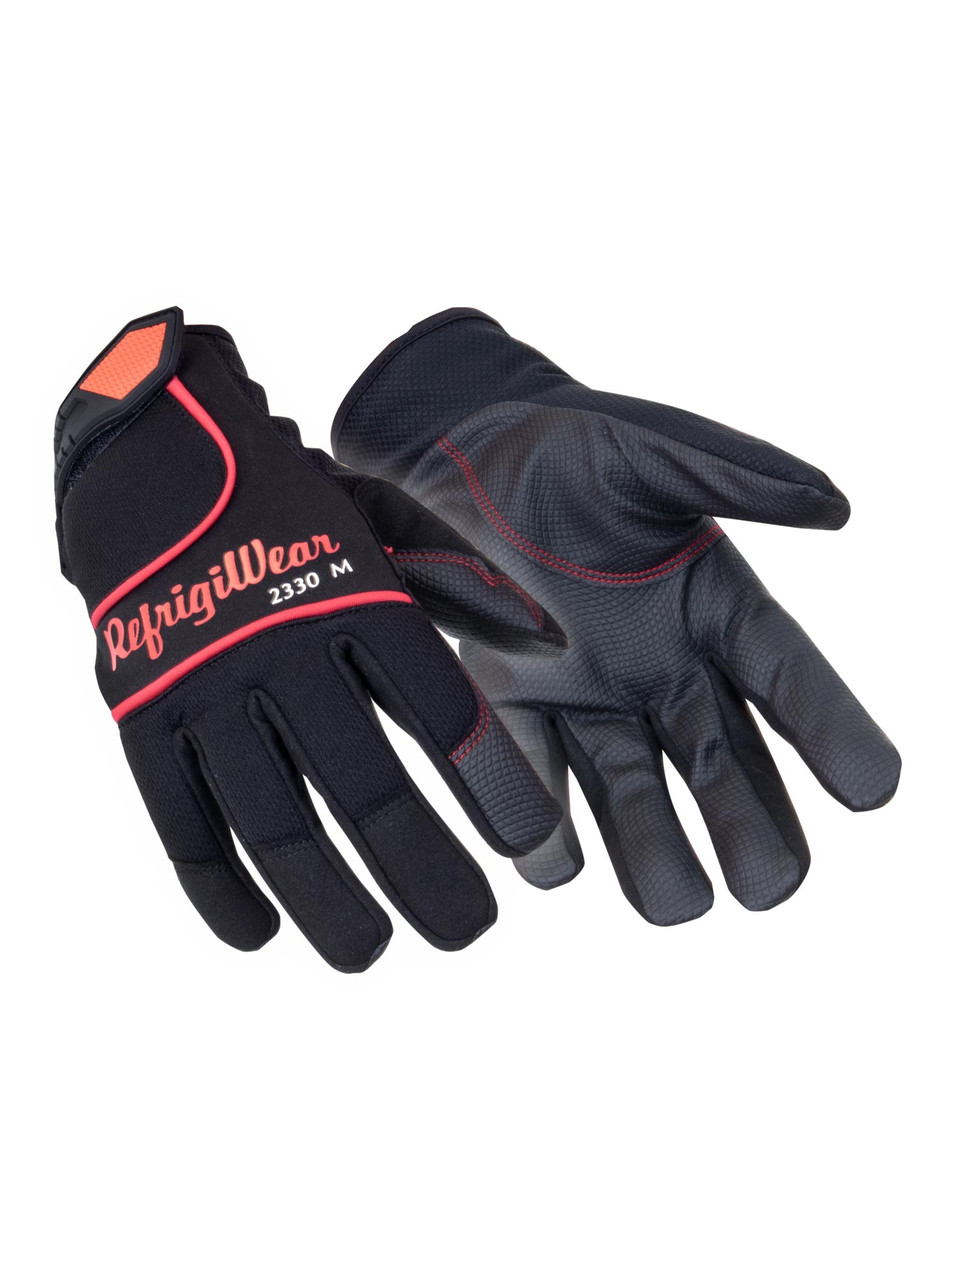 Refrigiwear Waterproof Insulated High Dexterity Gloves Black Medium